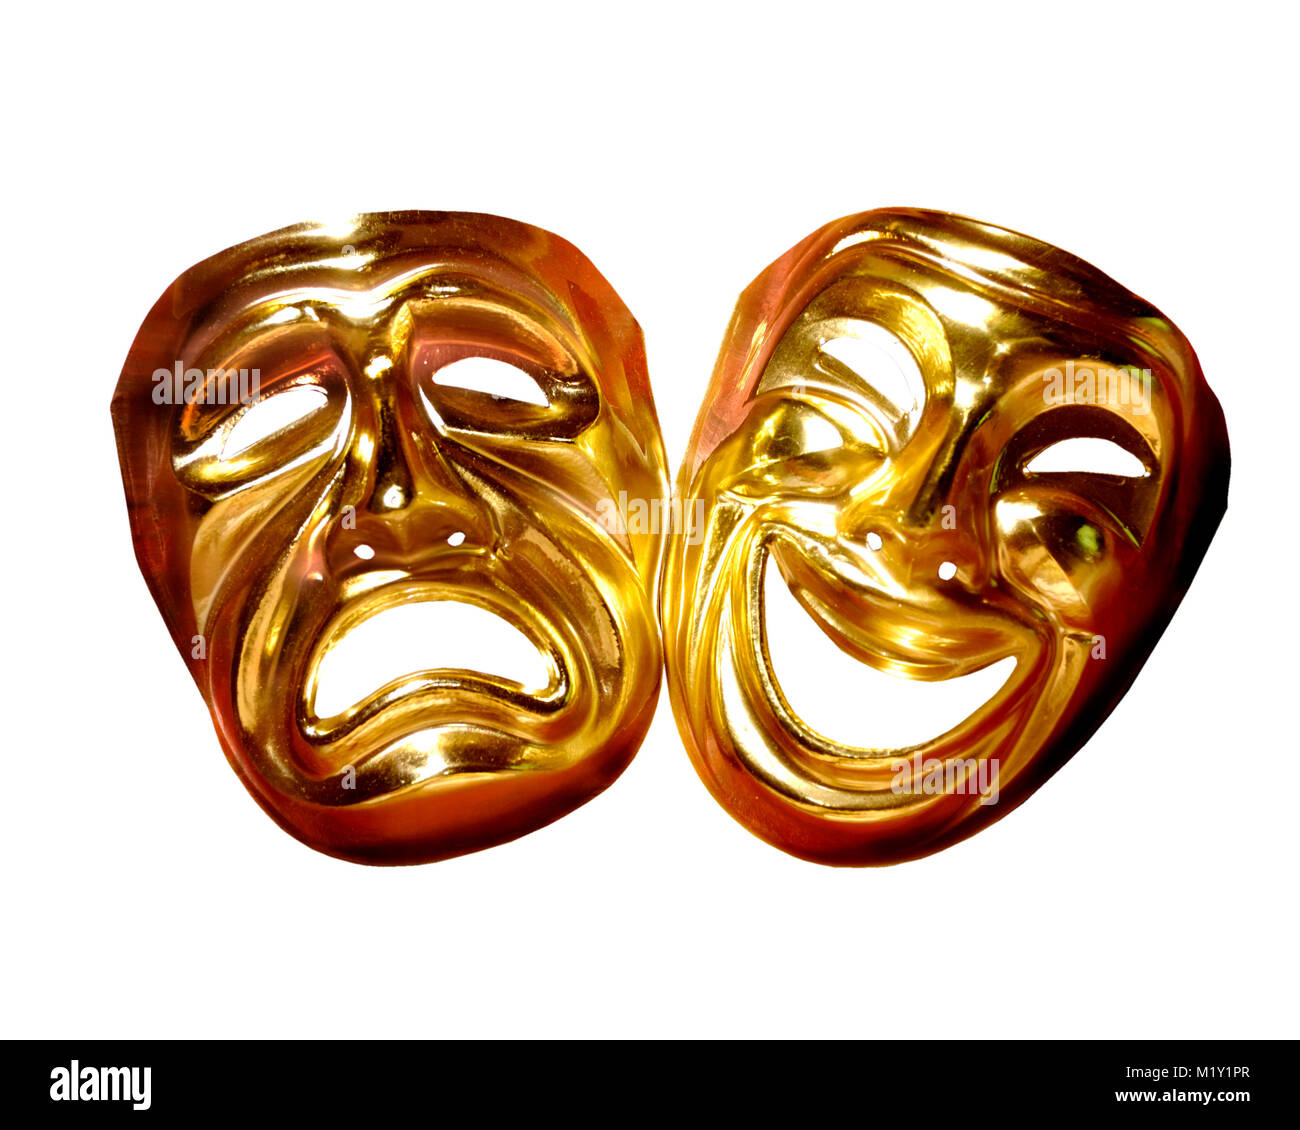 Tragedia Gold - Sad Crying Face Greek Theatre Masks - Just Posh Masks